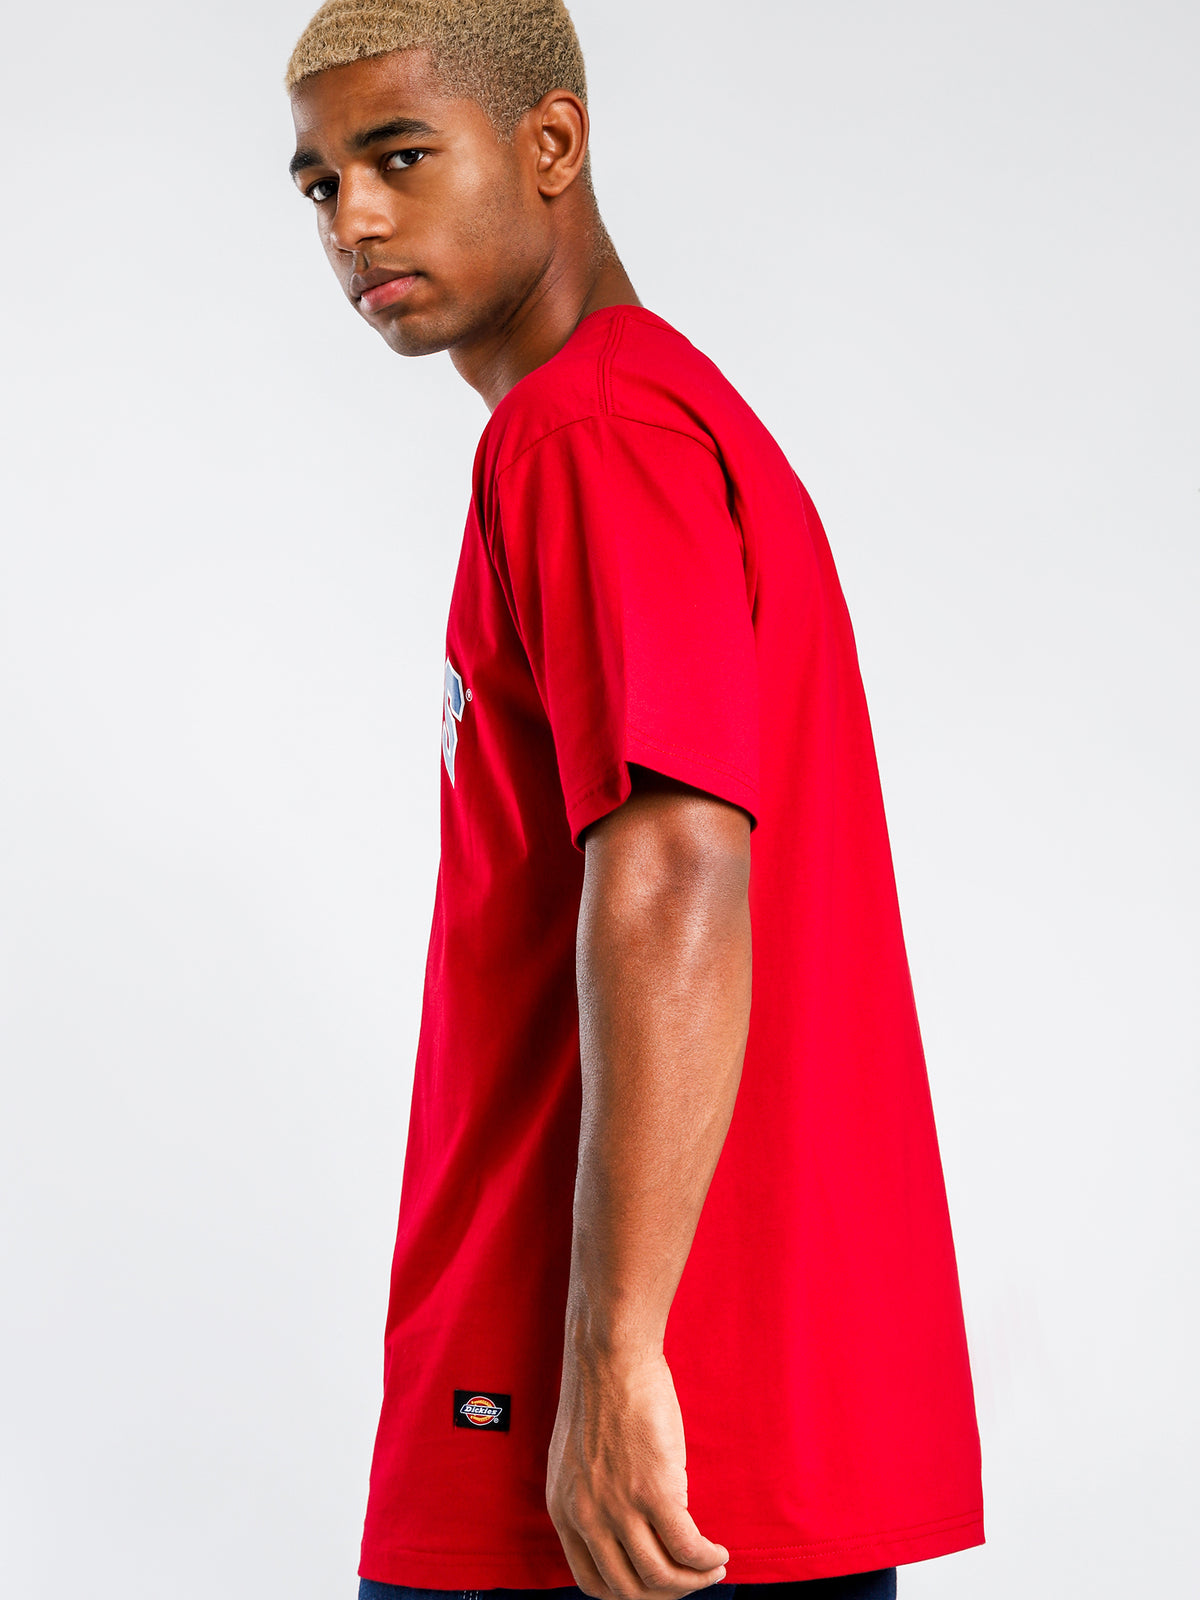 Princeton T-Shirt in Red